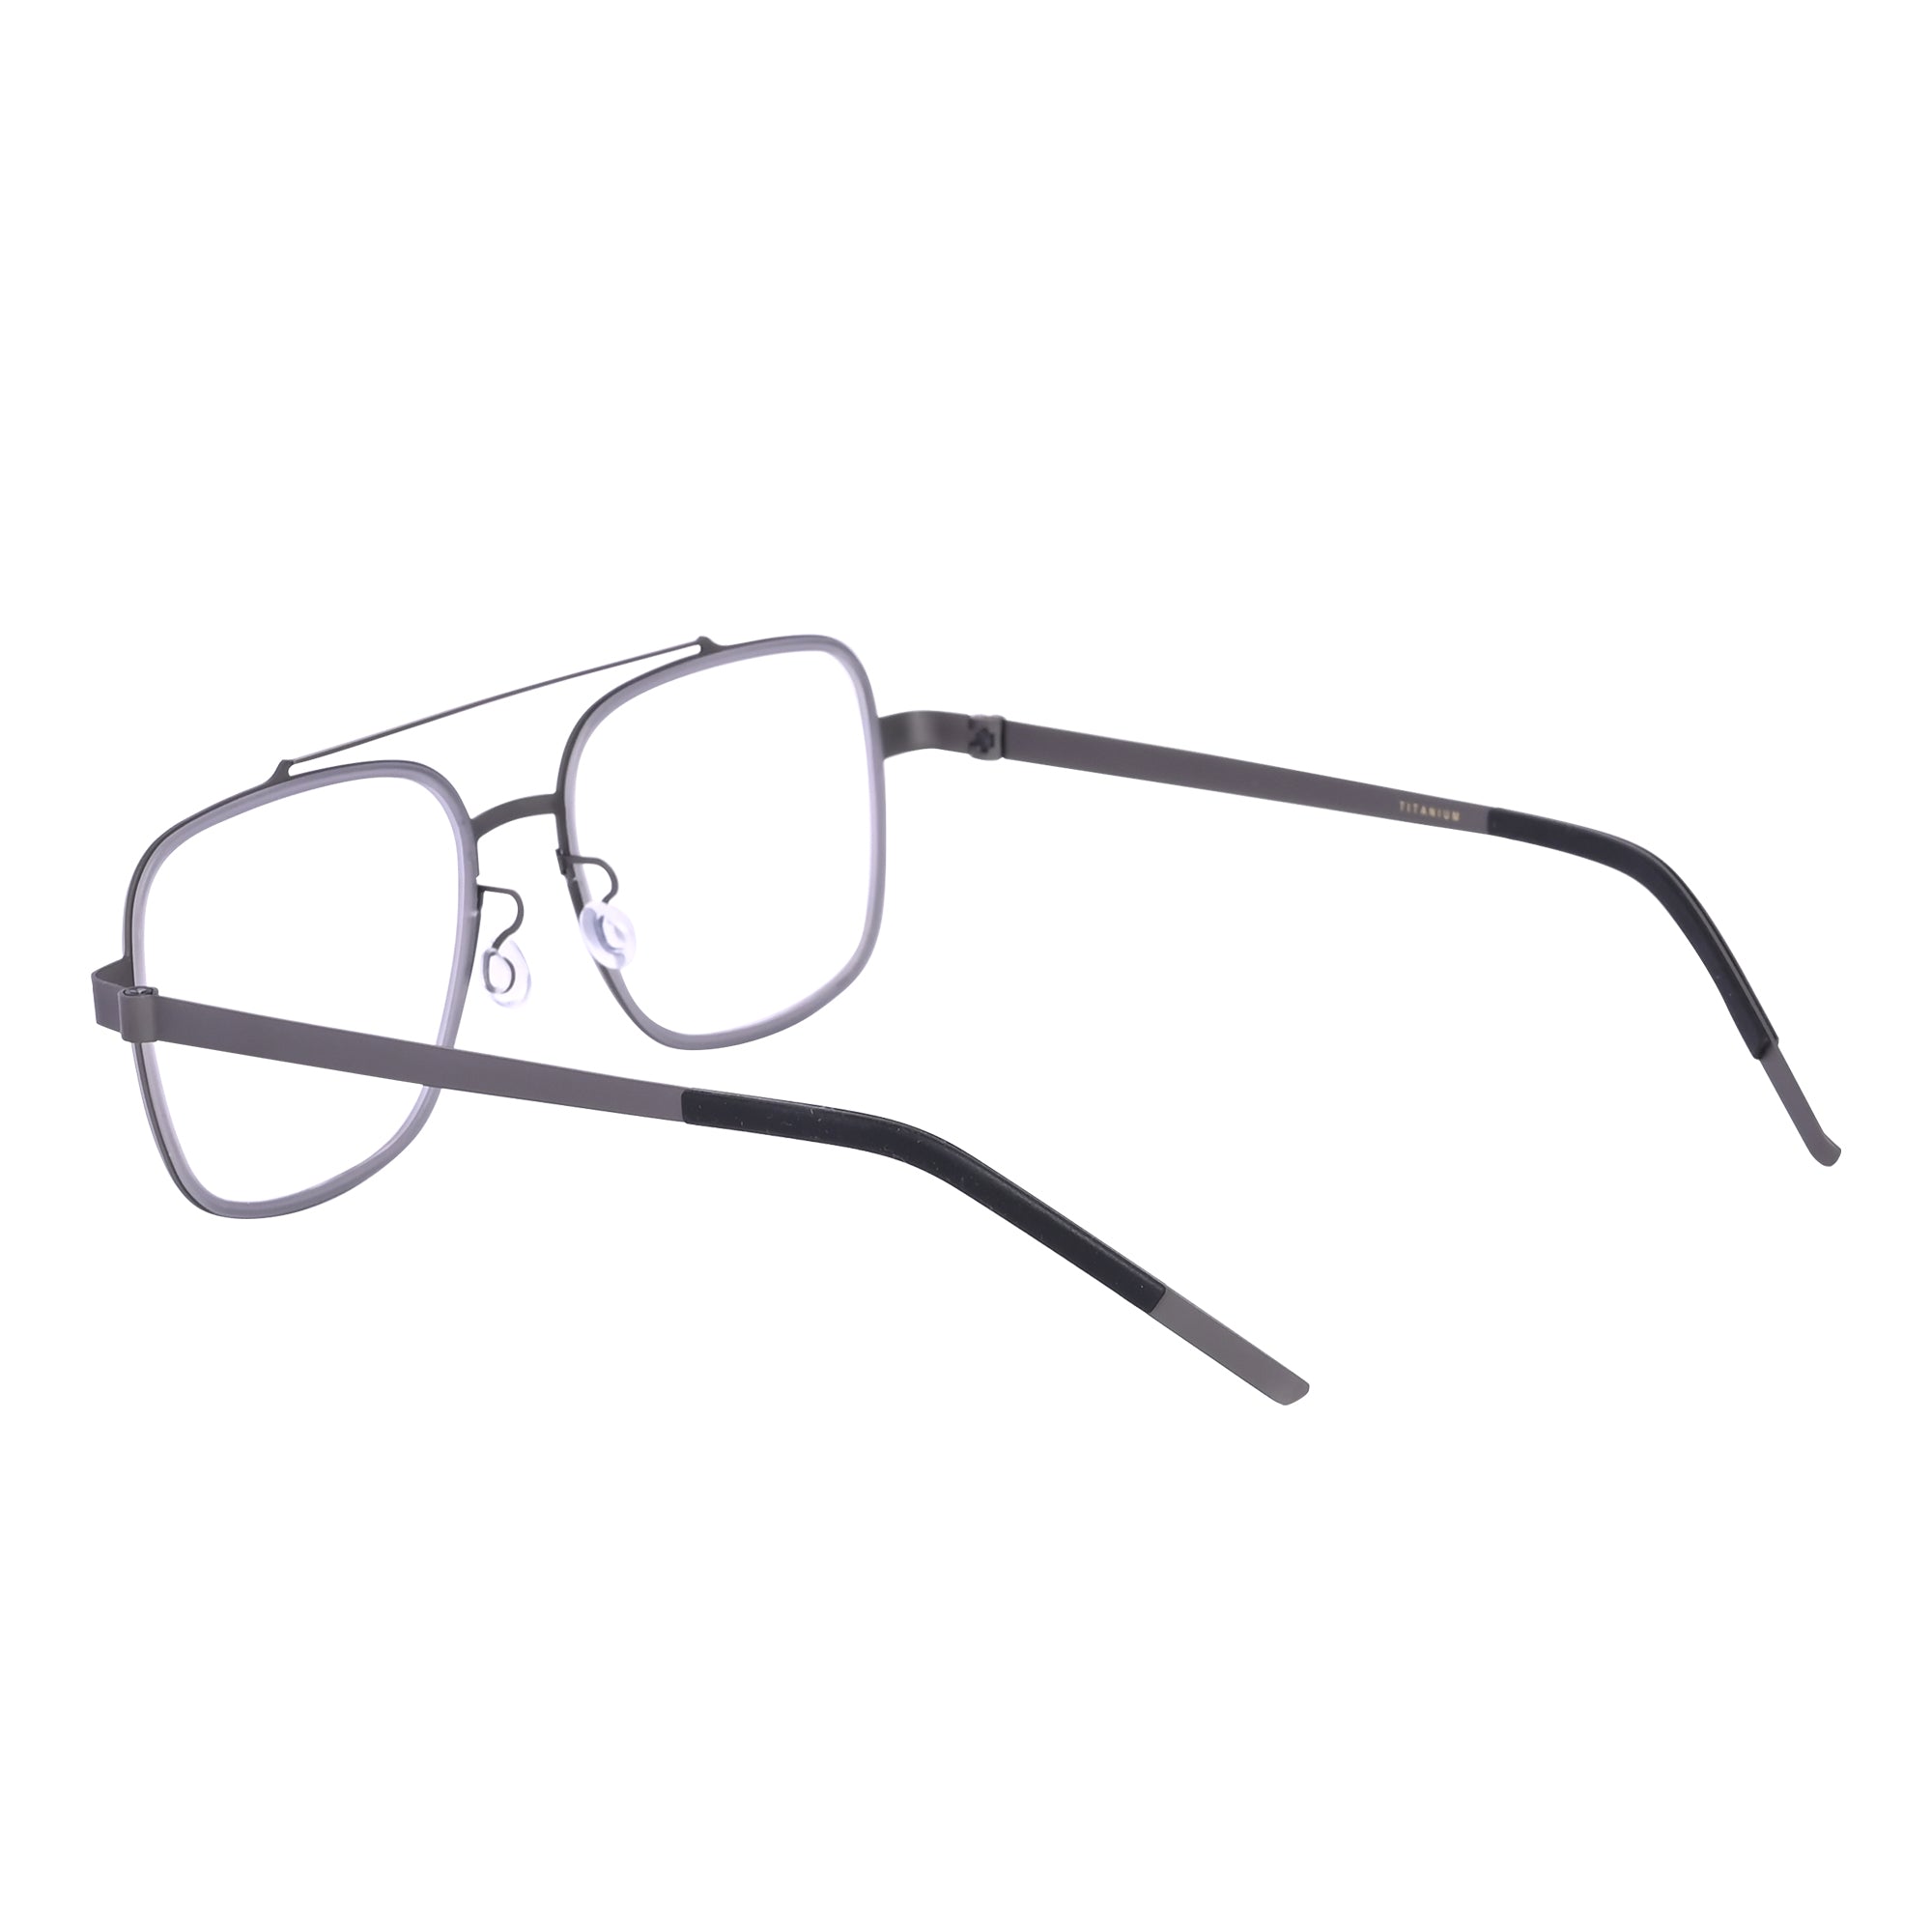 Grey Square Titanium Computer Eyeglasses - LG-006 GRY